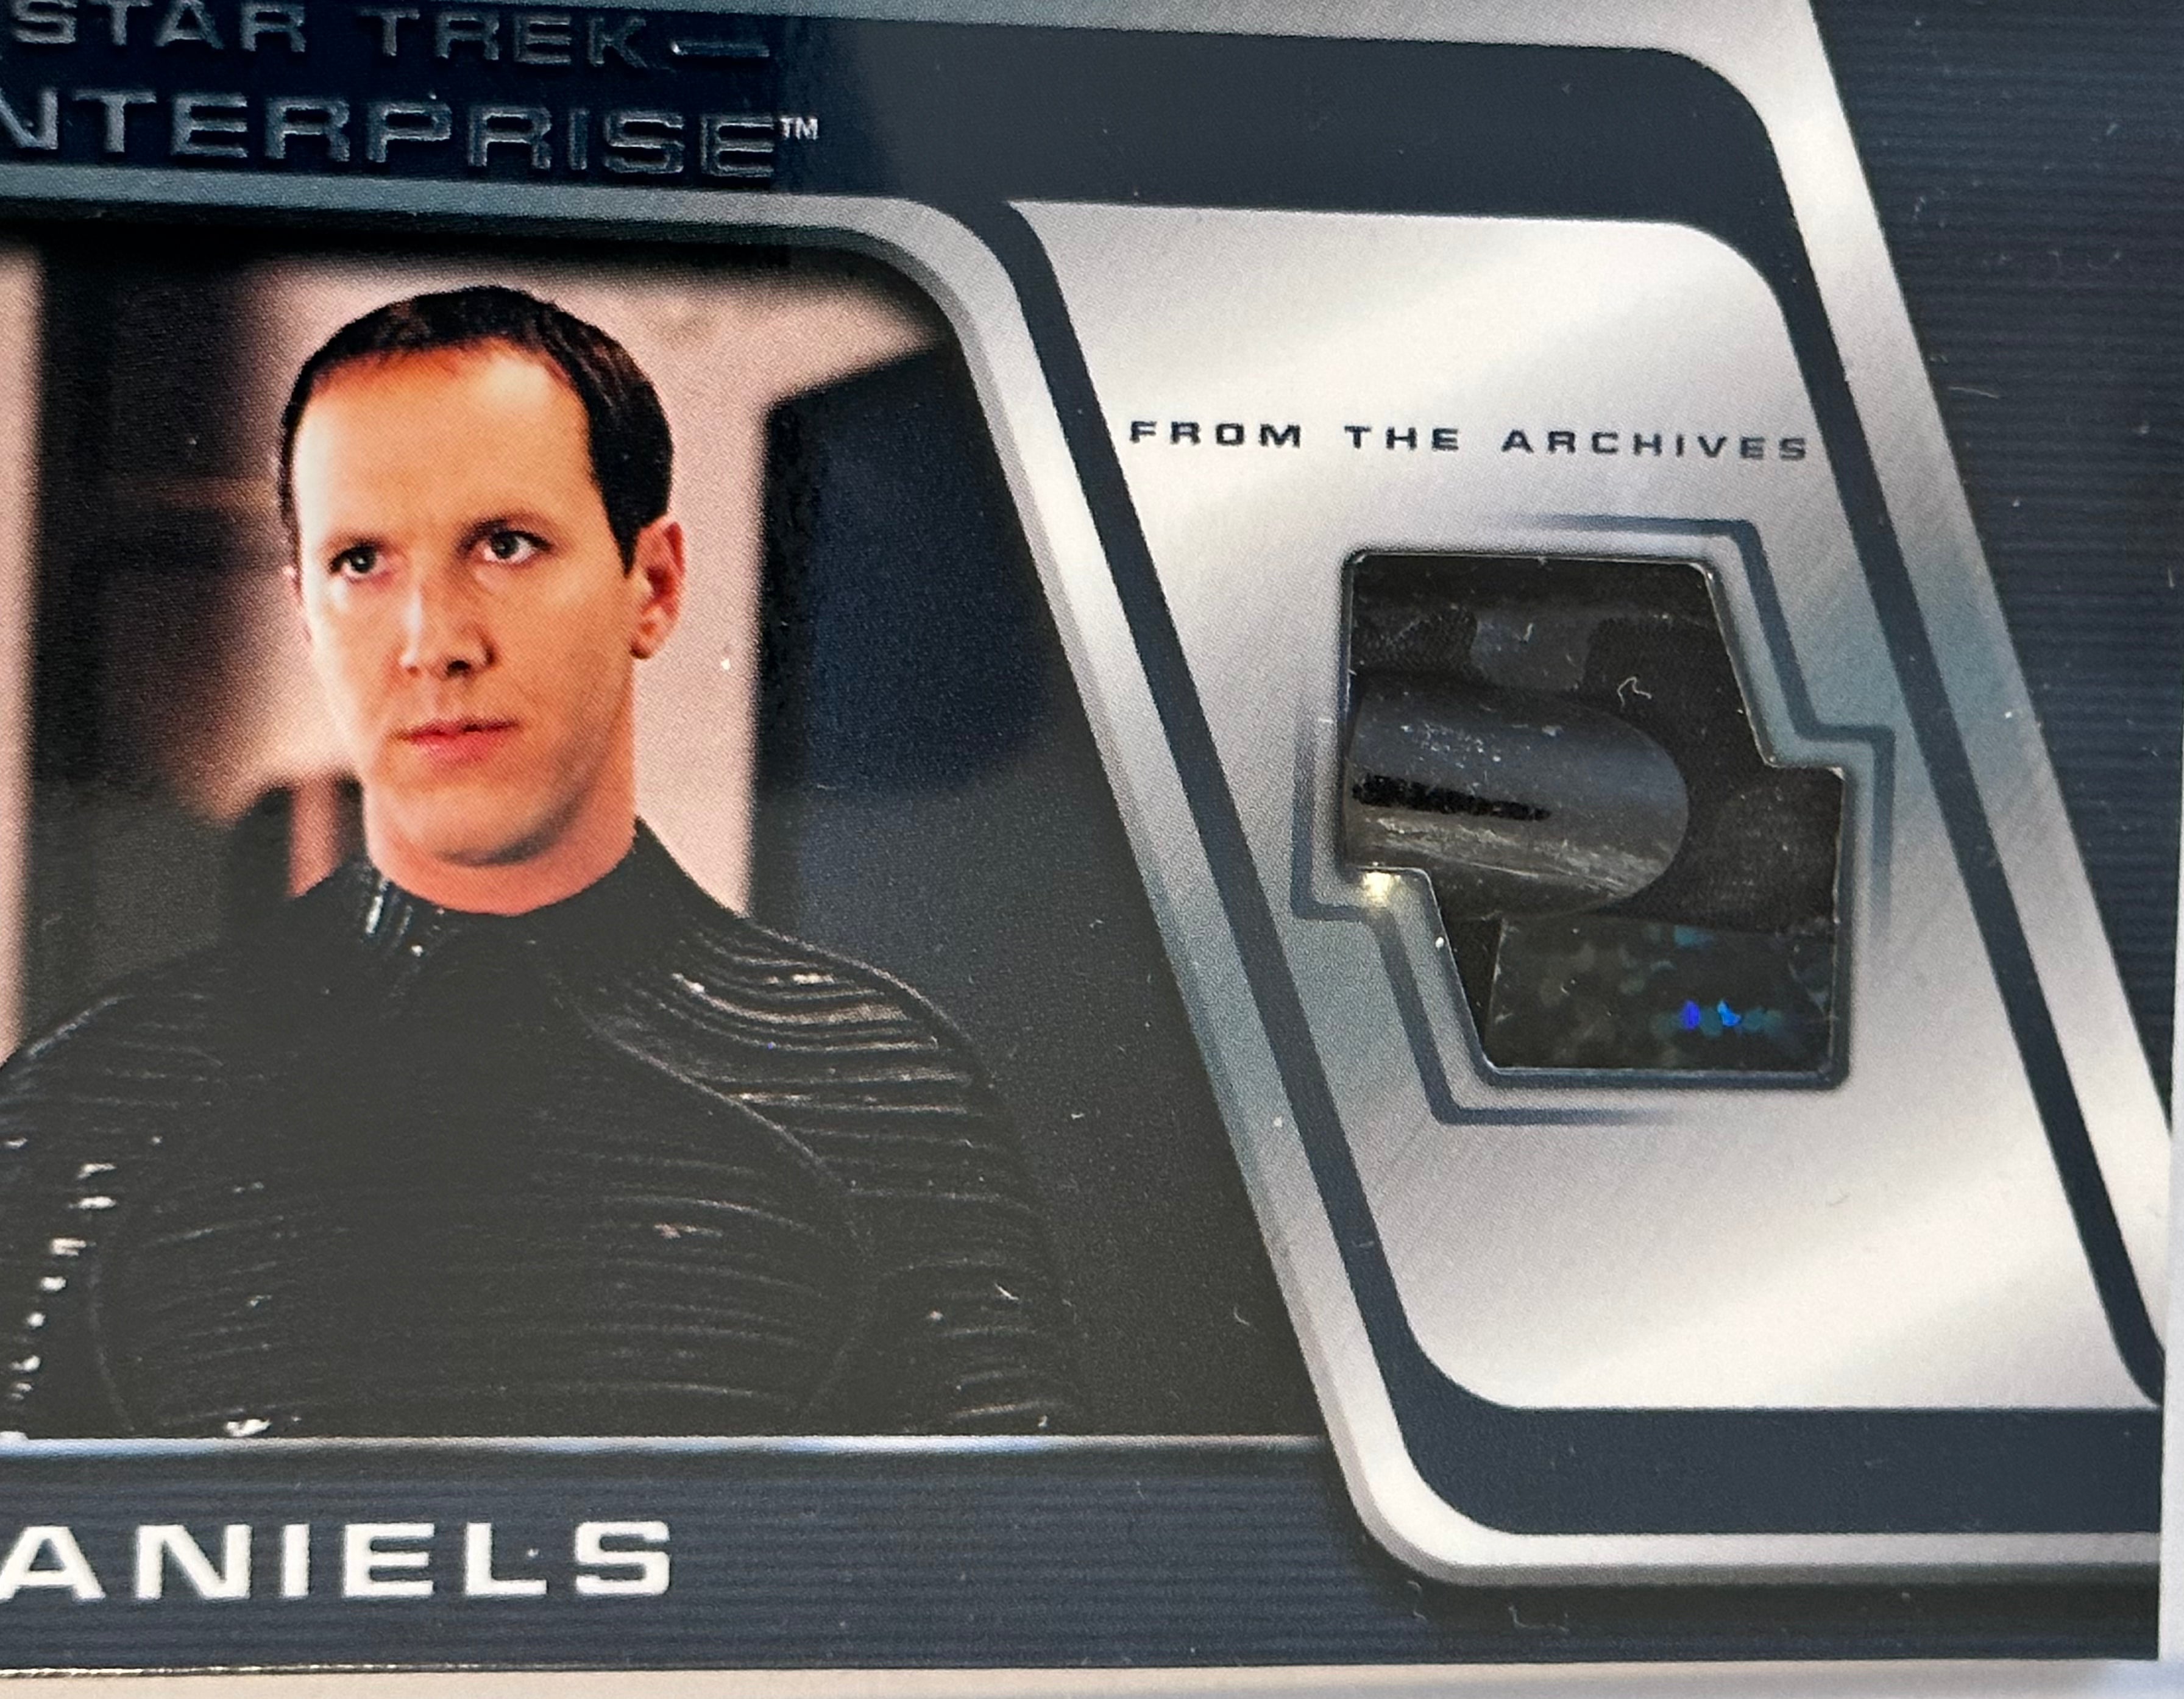 Star Trek Enterprise TV series memorabilia insert card